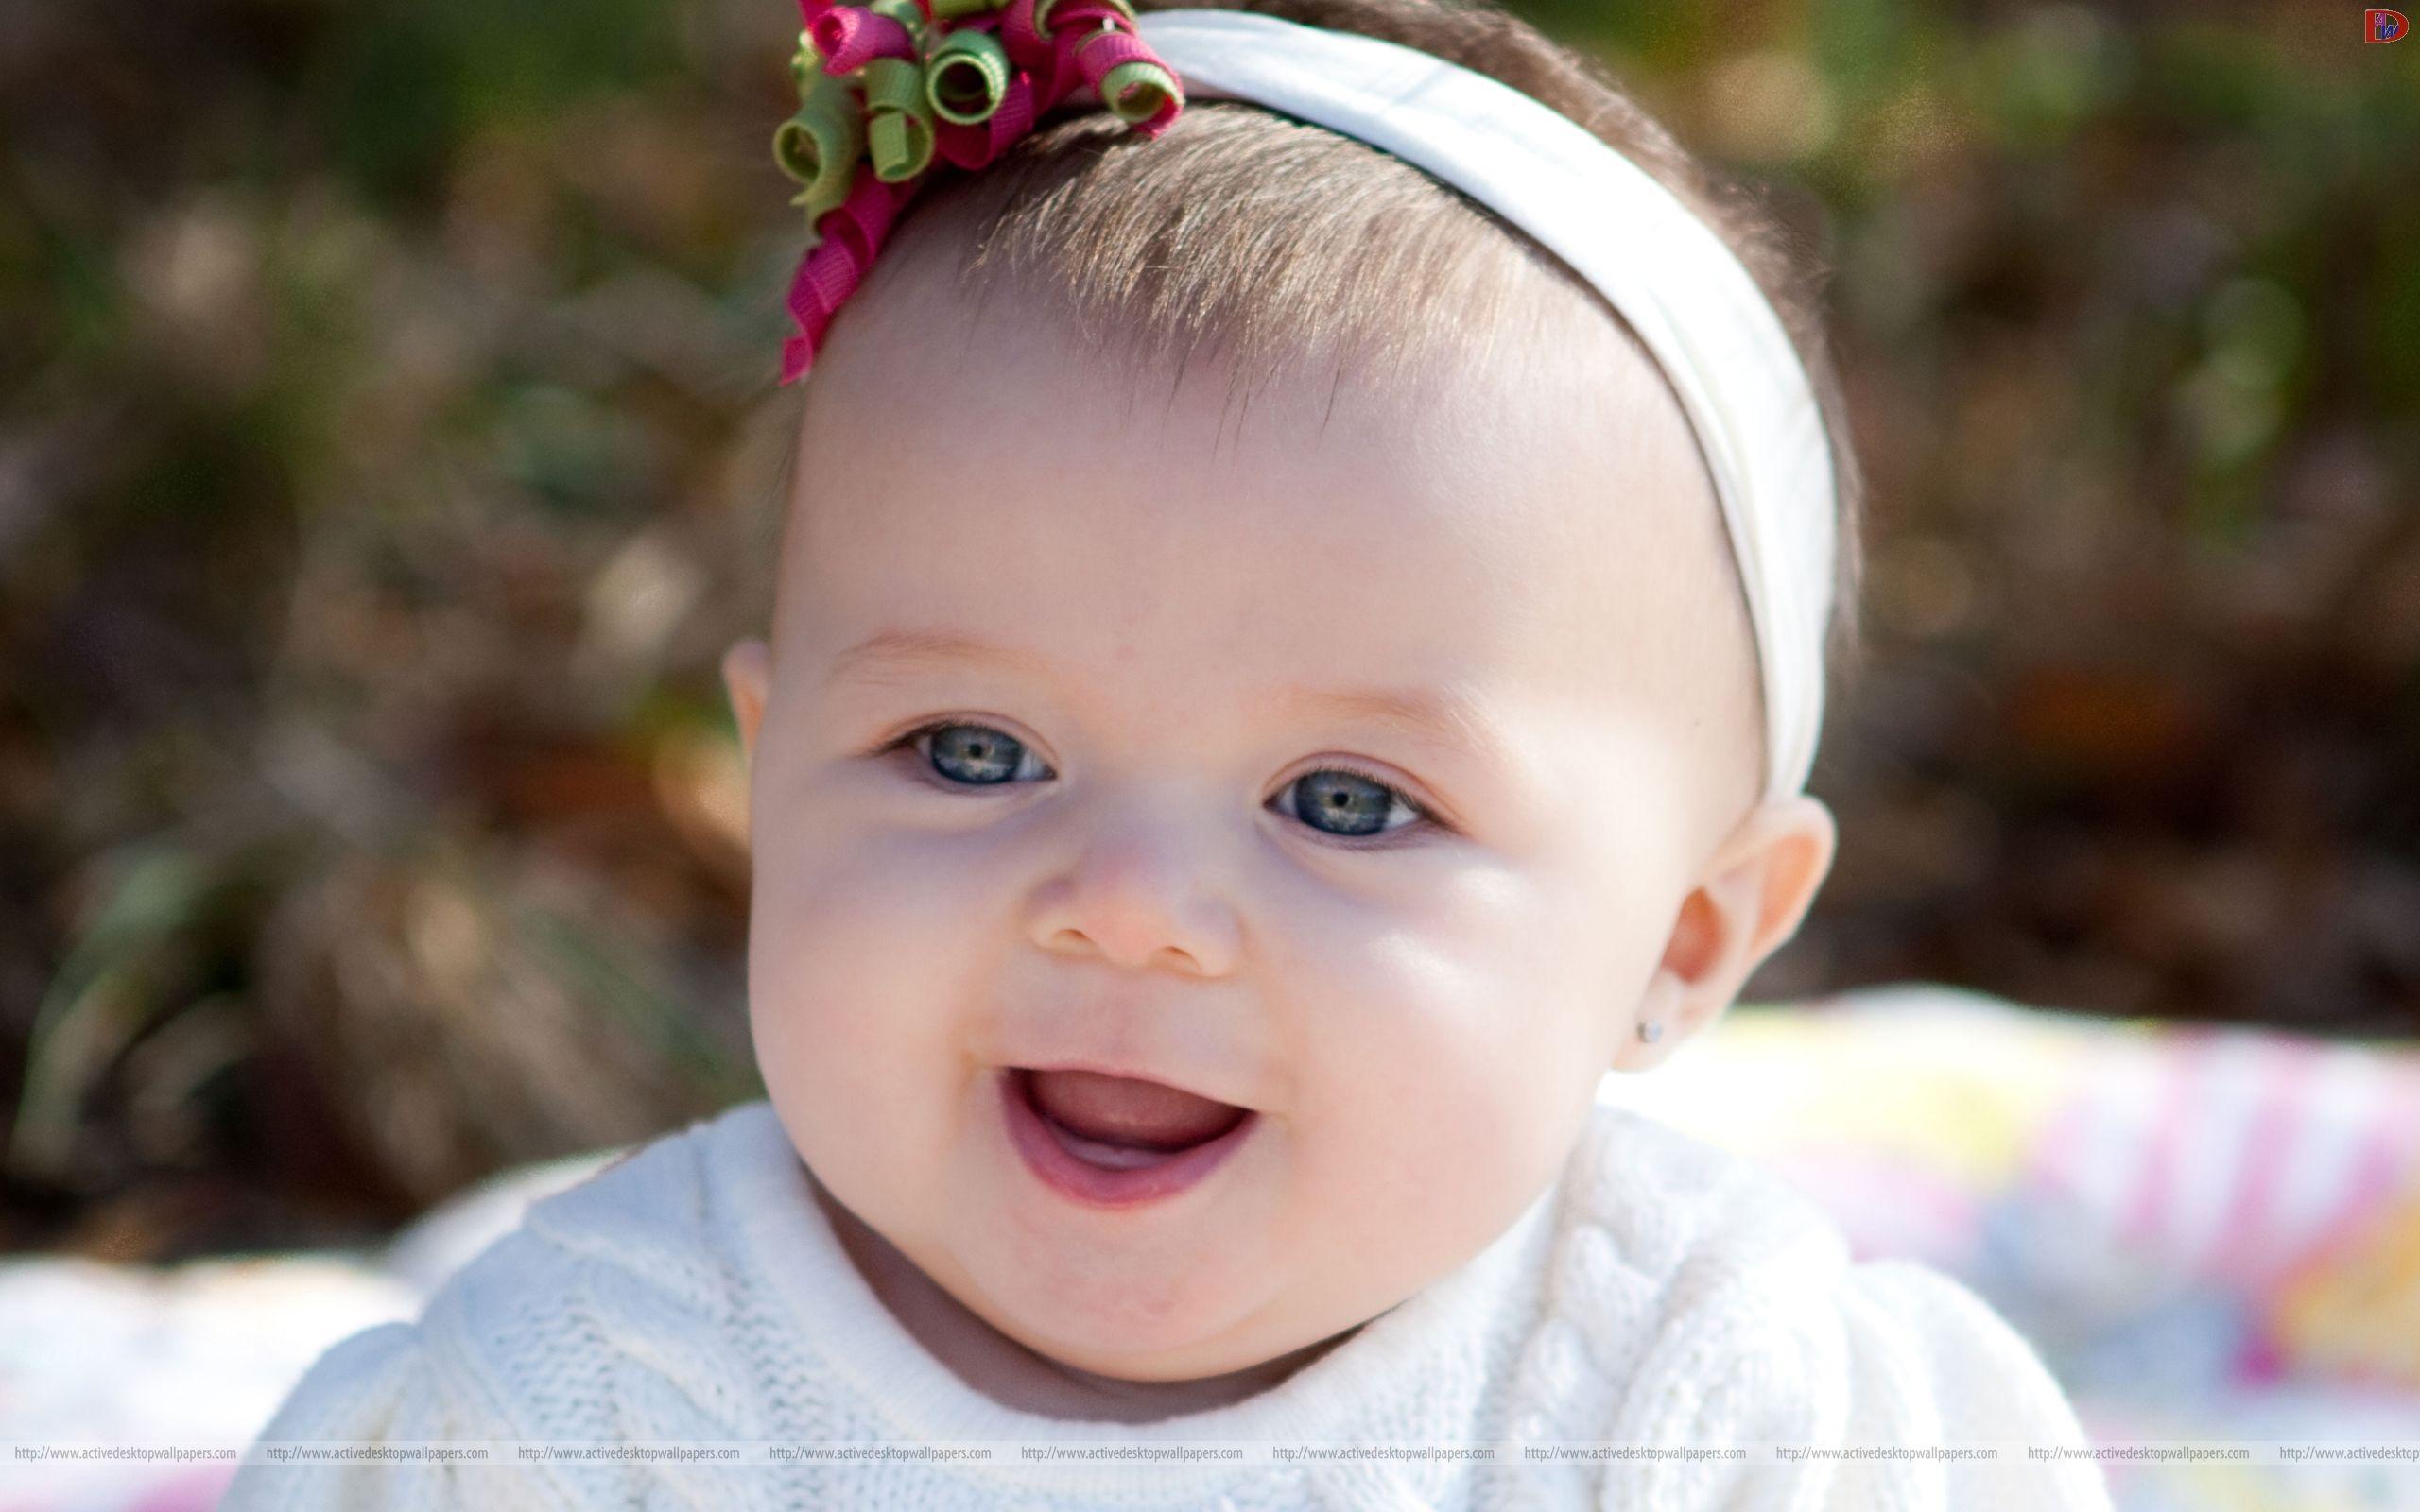 Baby Girl Pics Image on ST2299.com